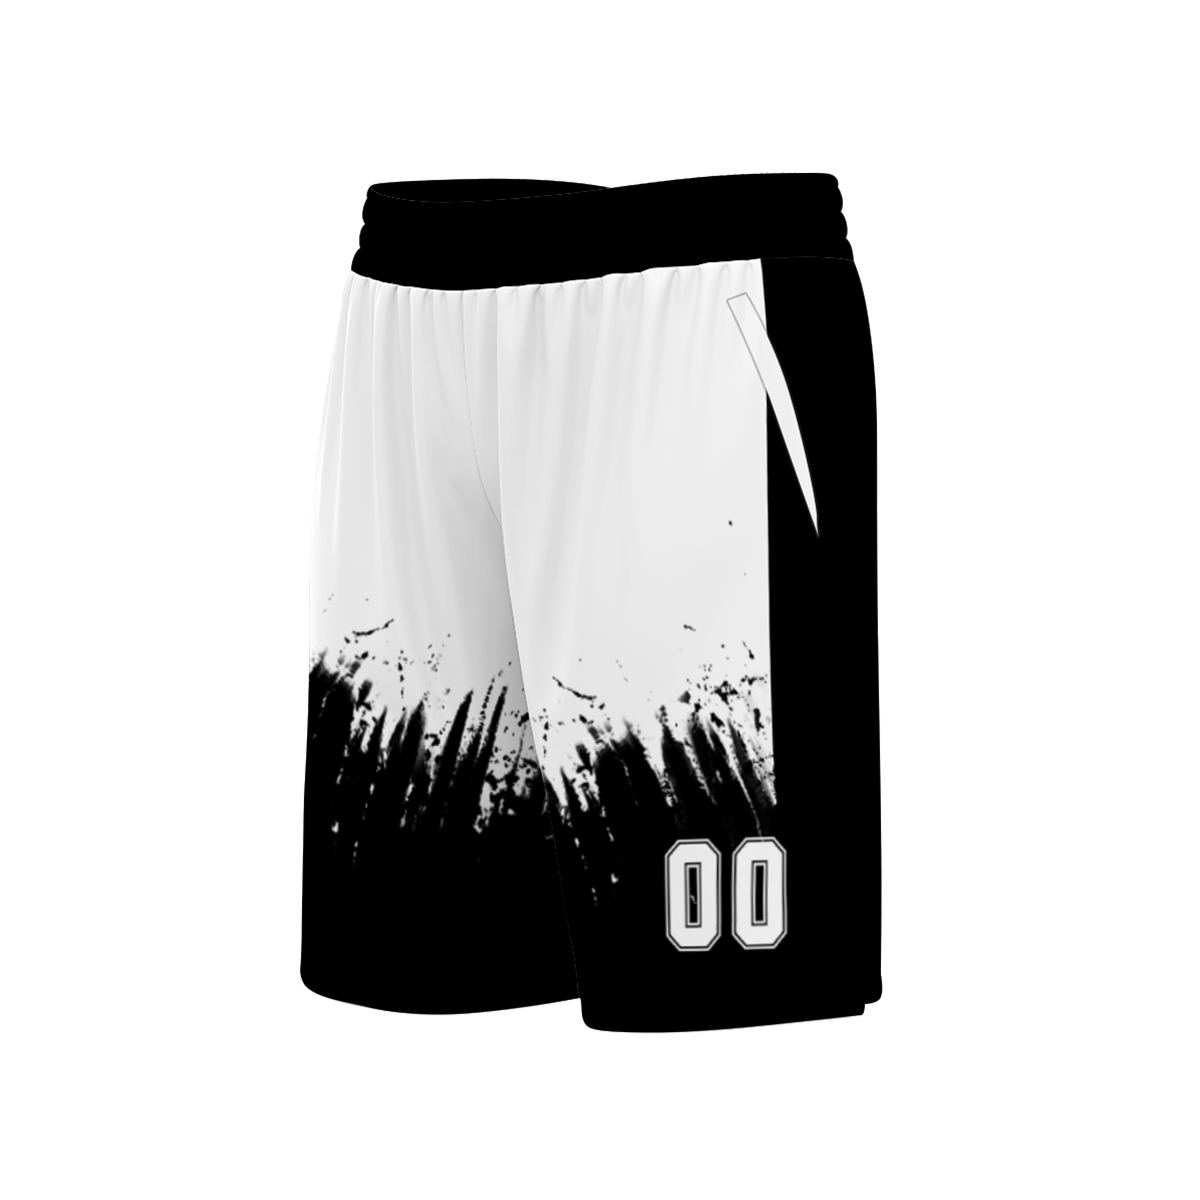 wholesale-custom-basketball-jerseys-design-blank-polyester-sublimation-quick-dry-basketball-jerseys-for-men-women-at-cj-pod-8